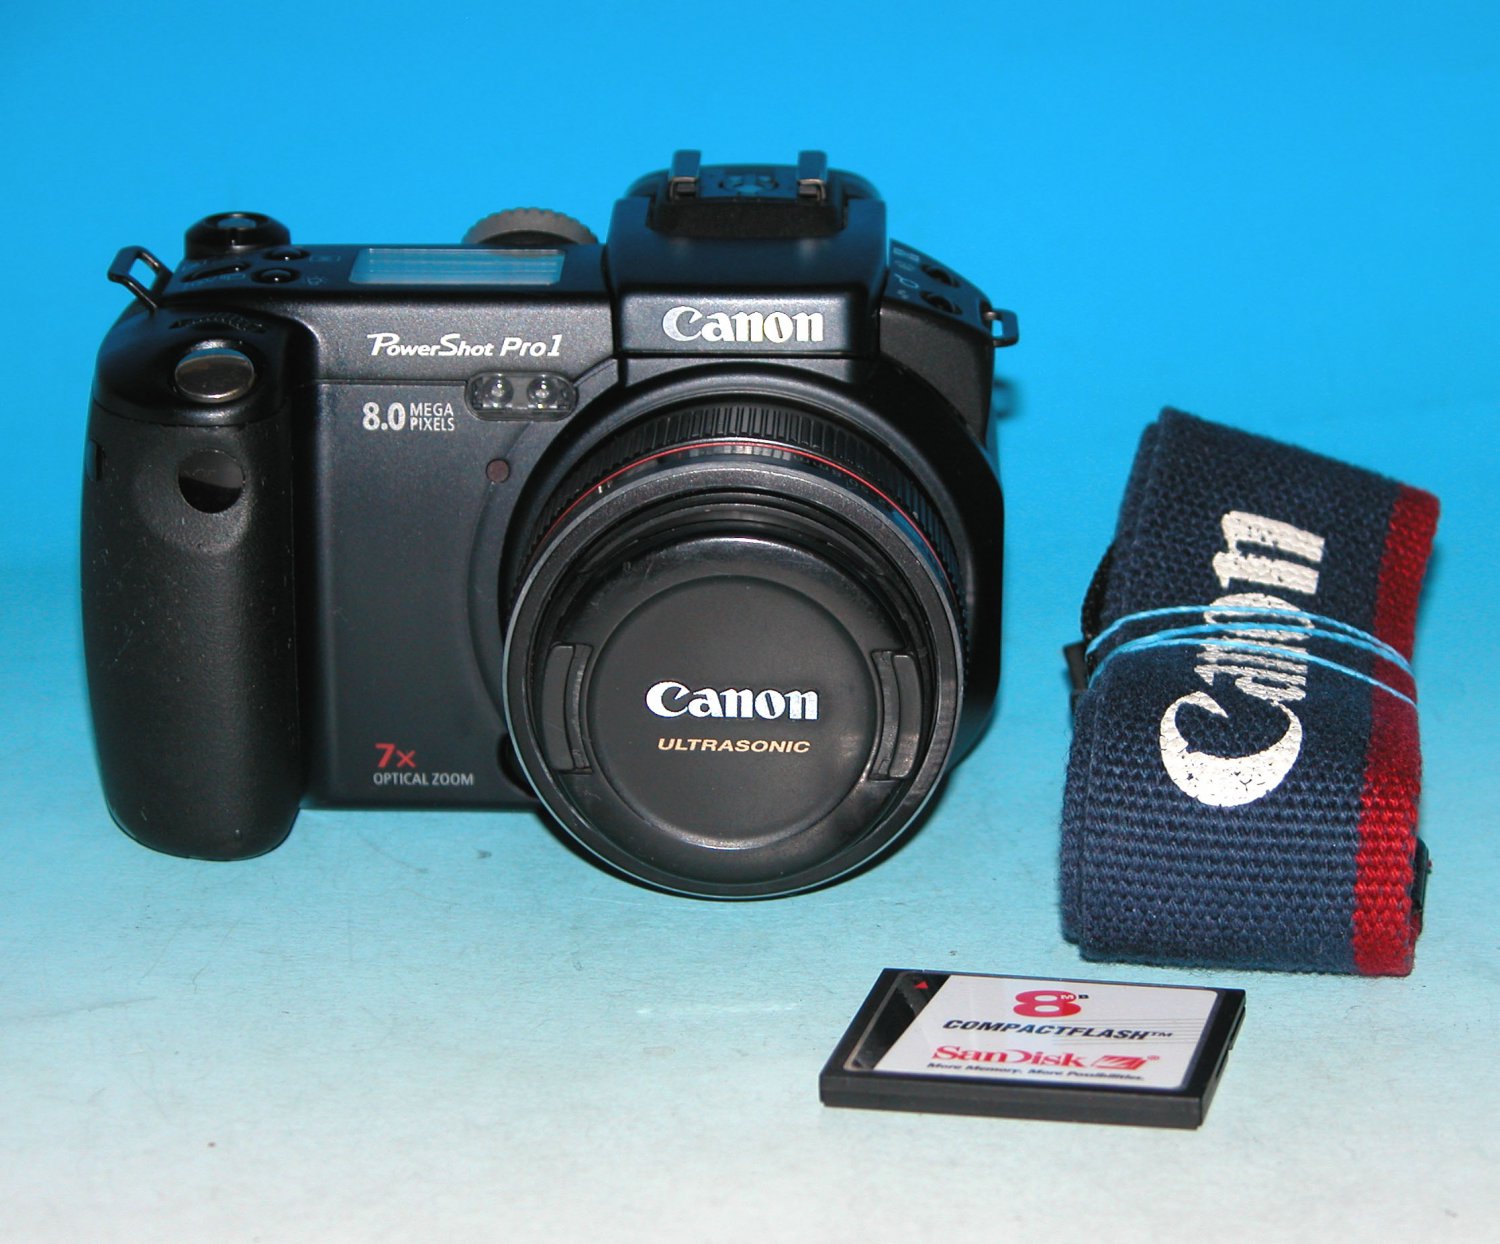 Canon PowerShot Pro 1 8.0MP Digital Camera - Black #ns